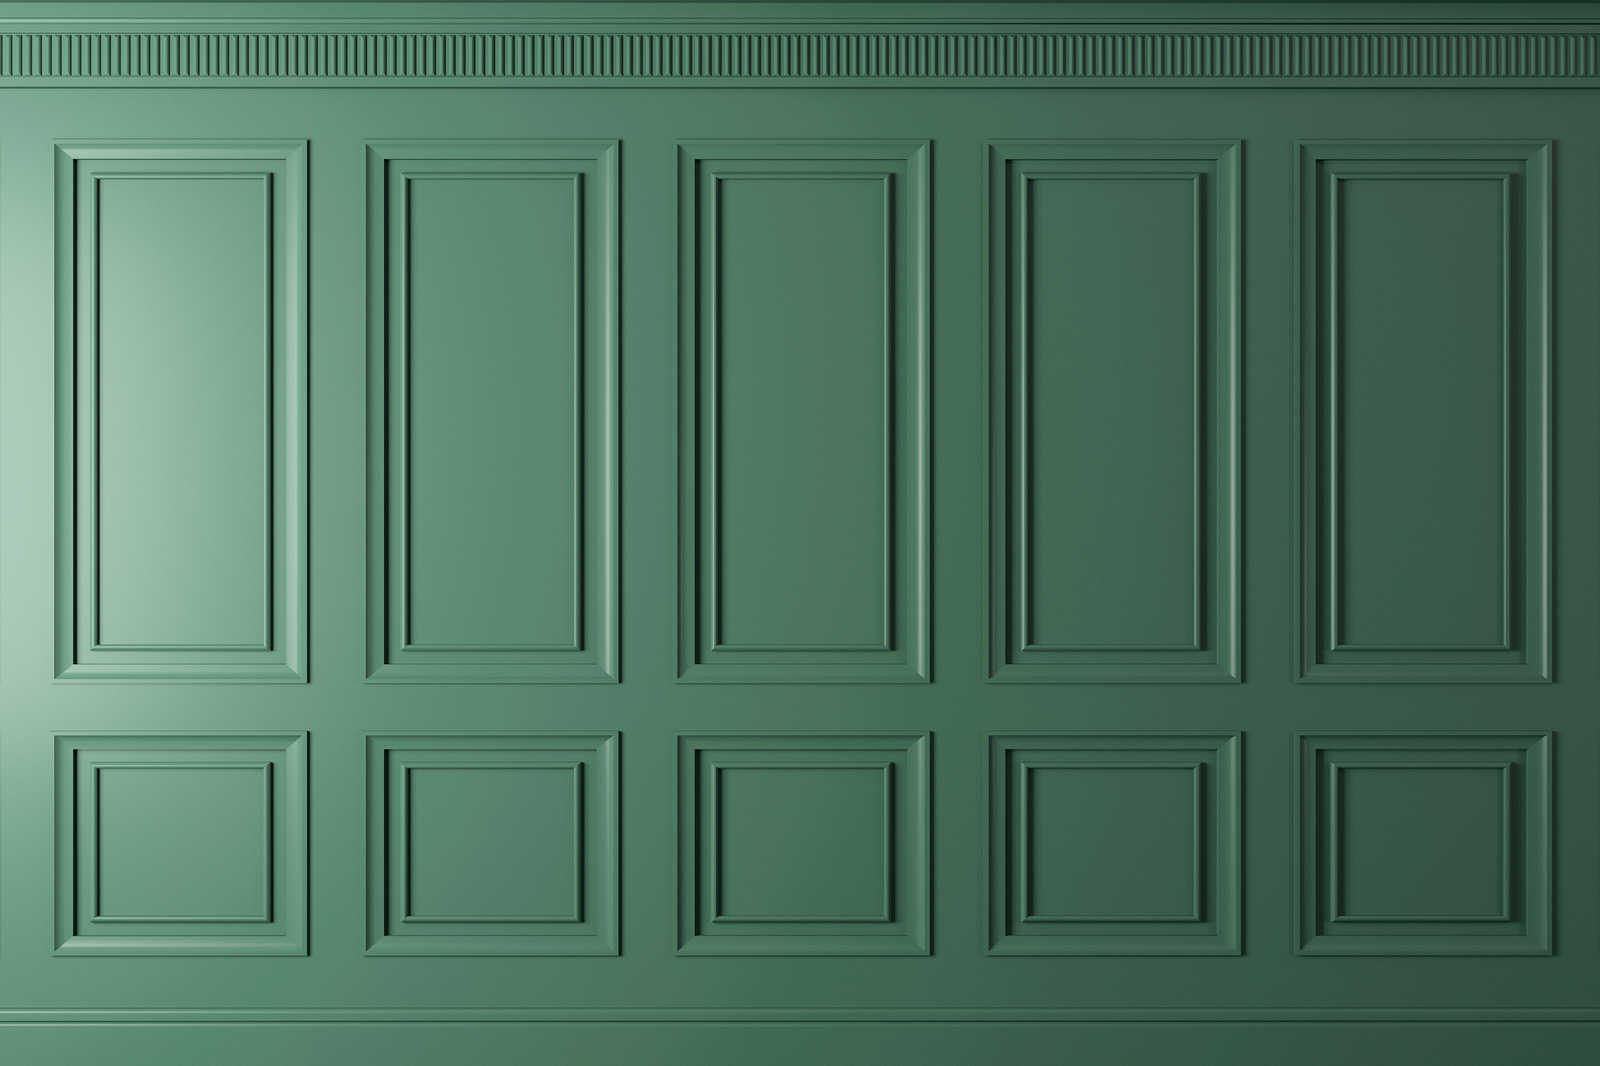             Kensington 1 - 3D Canvas painting wood panelling fir green - 1.20 m x 0.80 m
        